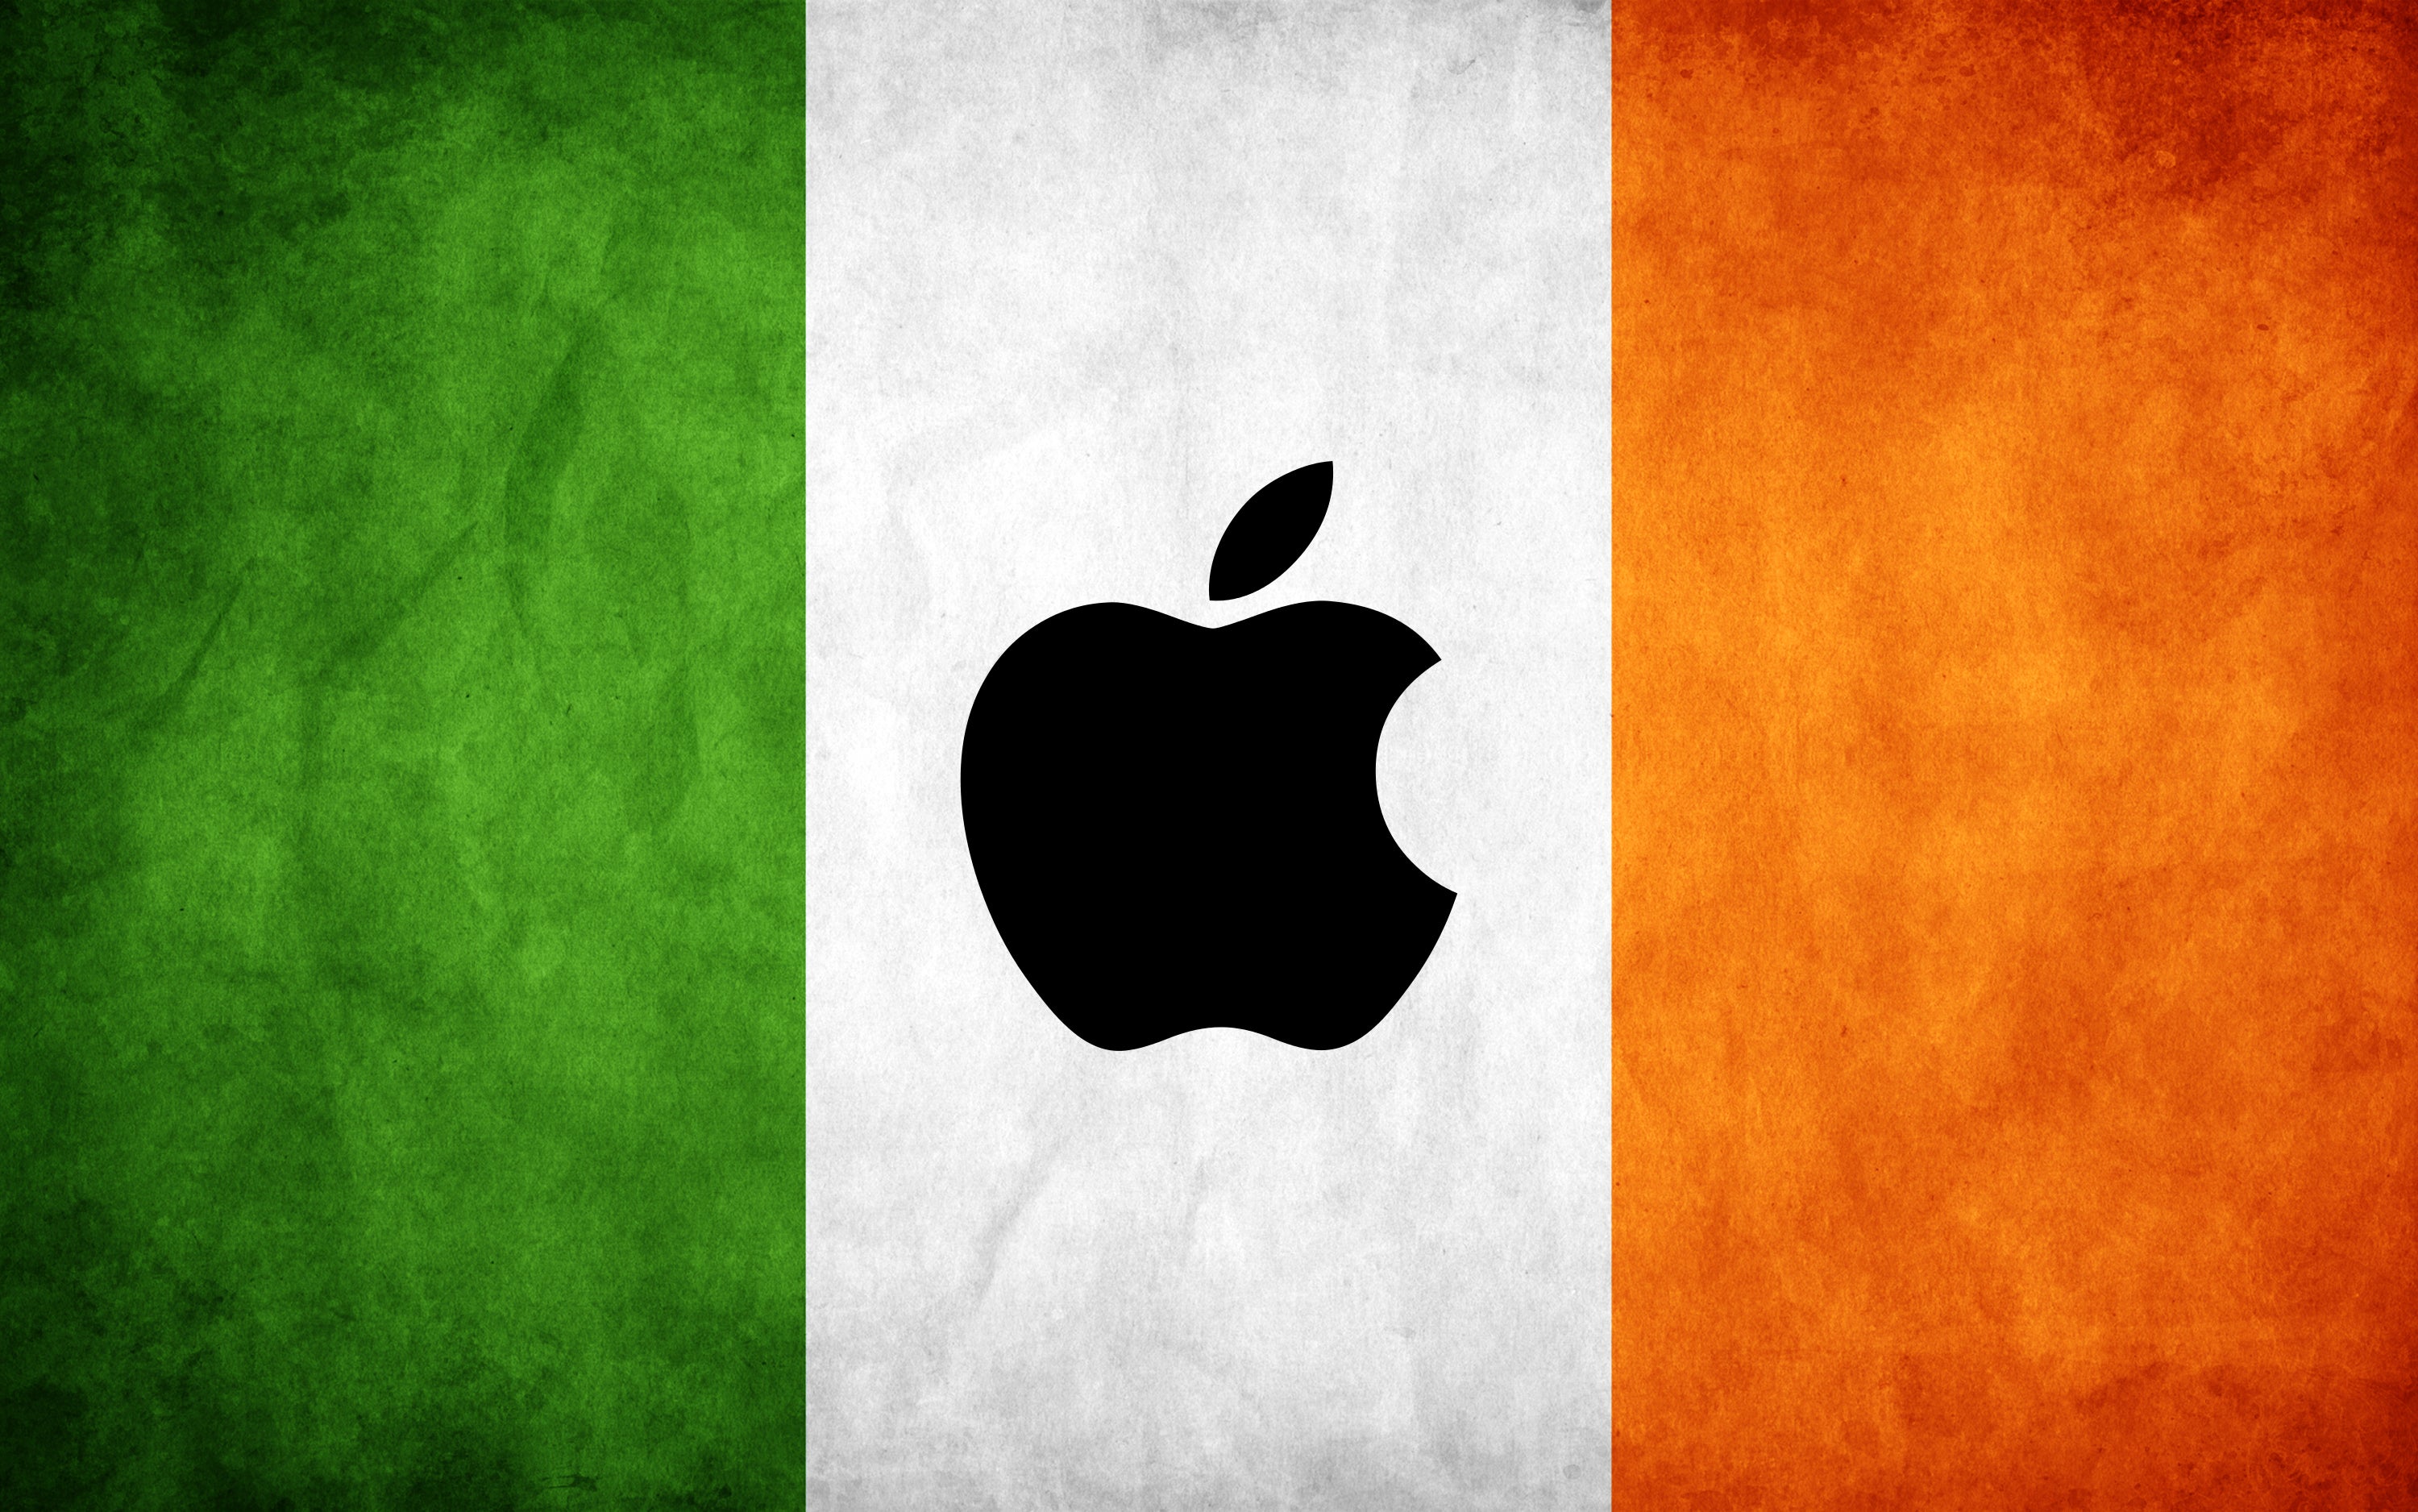 Apple and Ireland to challenge $14 billion EU tax ruling